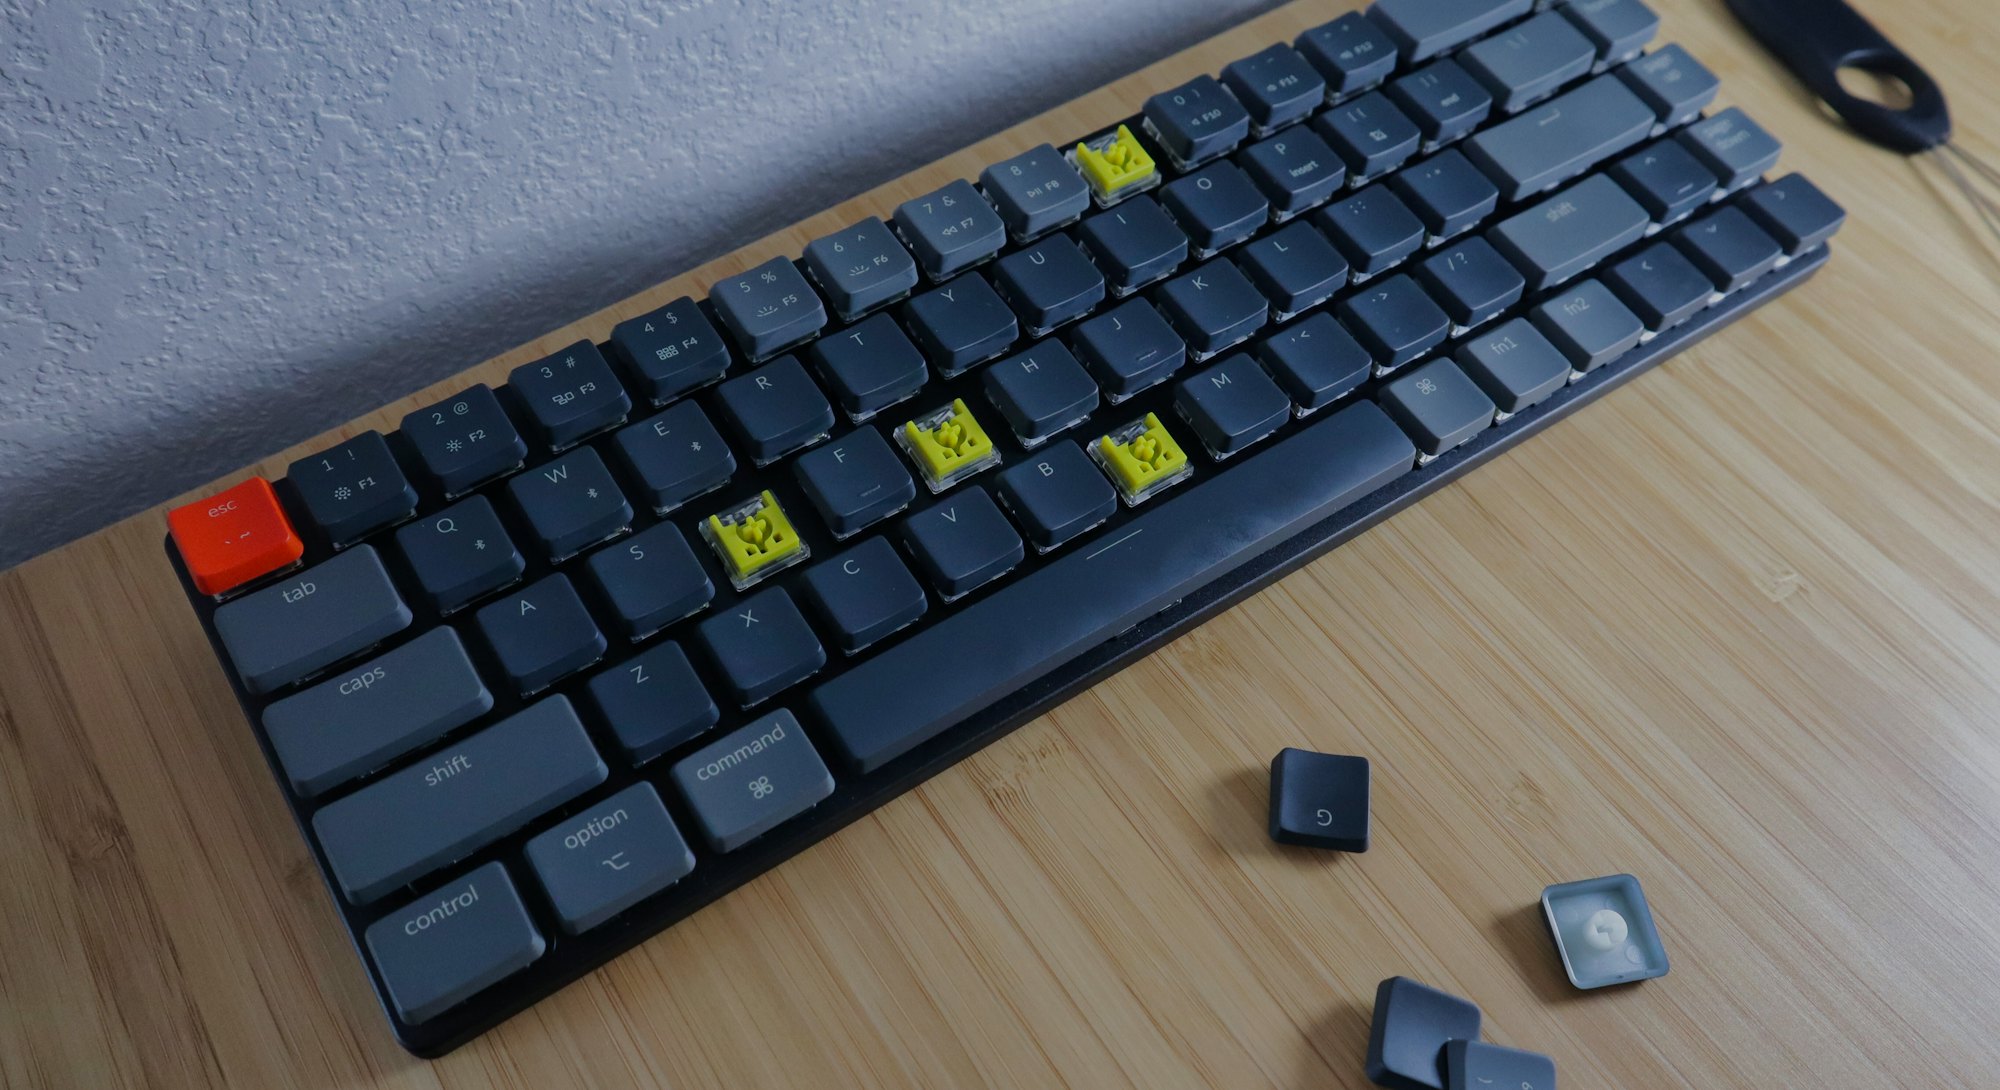 Keychron K7 mechanical keyboard review